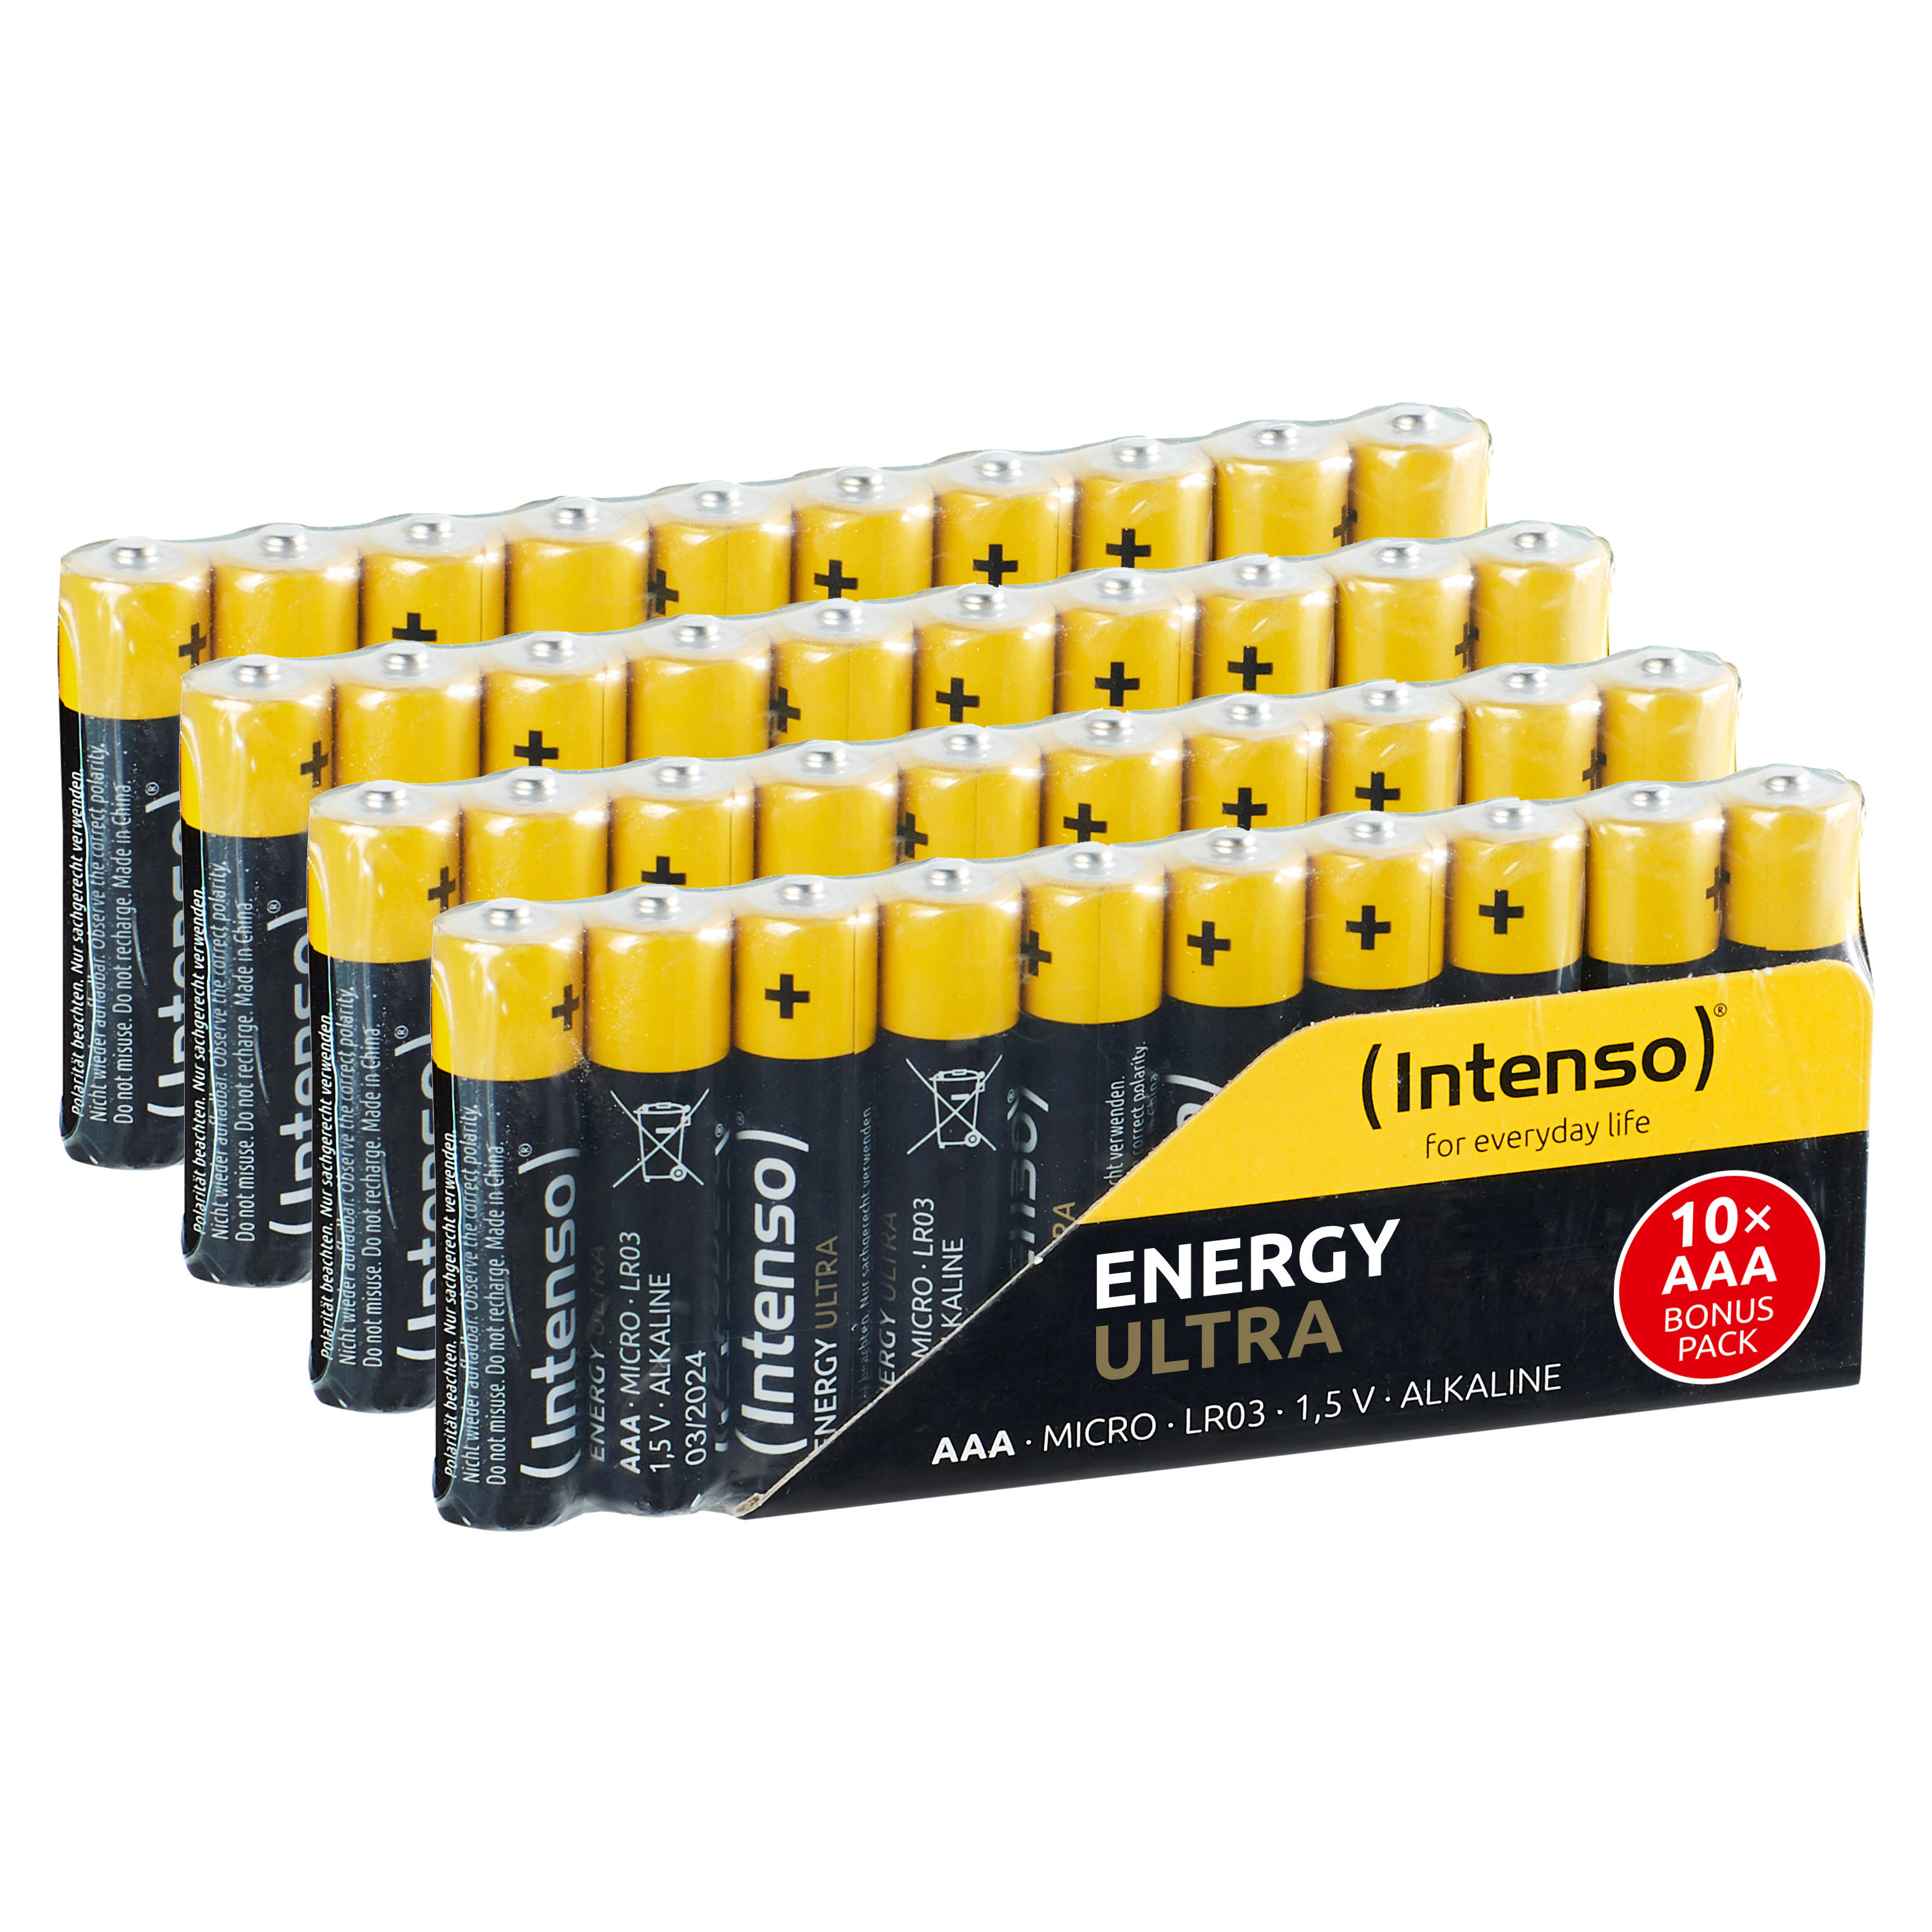 Intenso 7501510 - Energy Ultra Alkaline Batterie AAA Micro 40er-Pack - Batterie